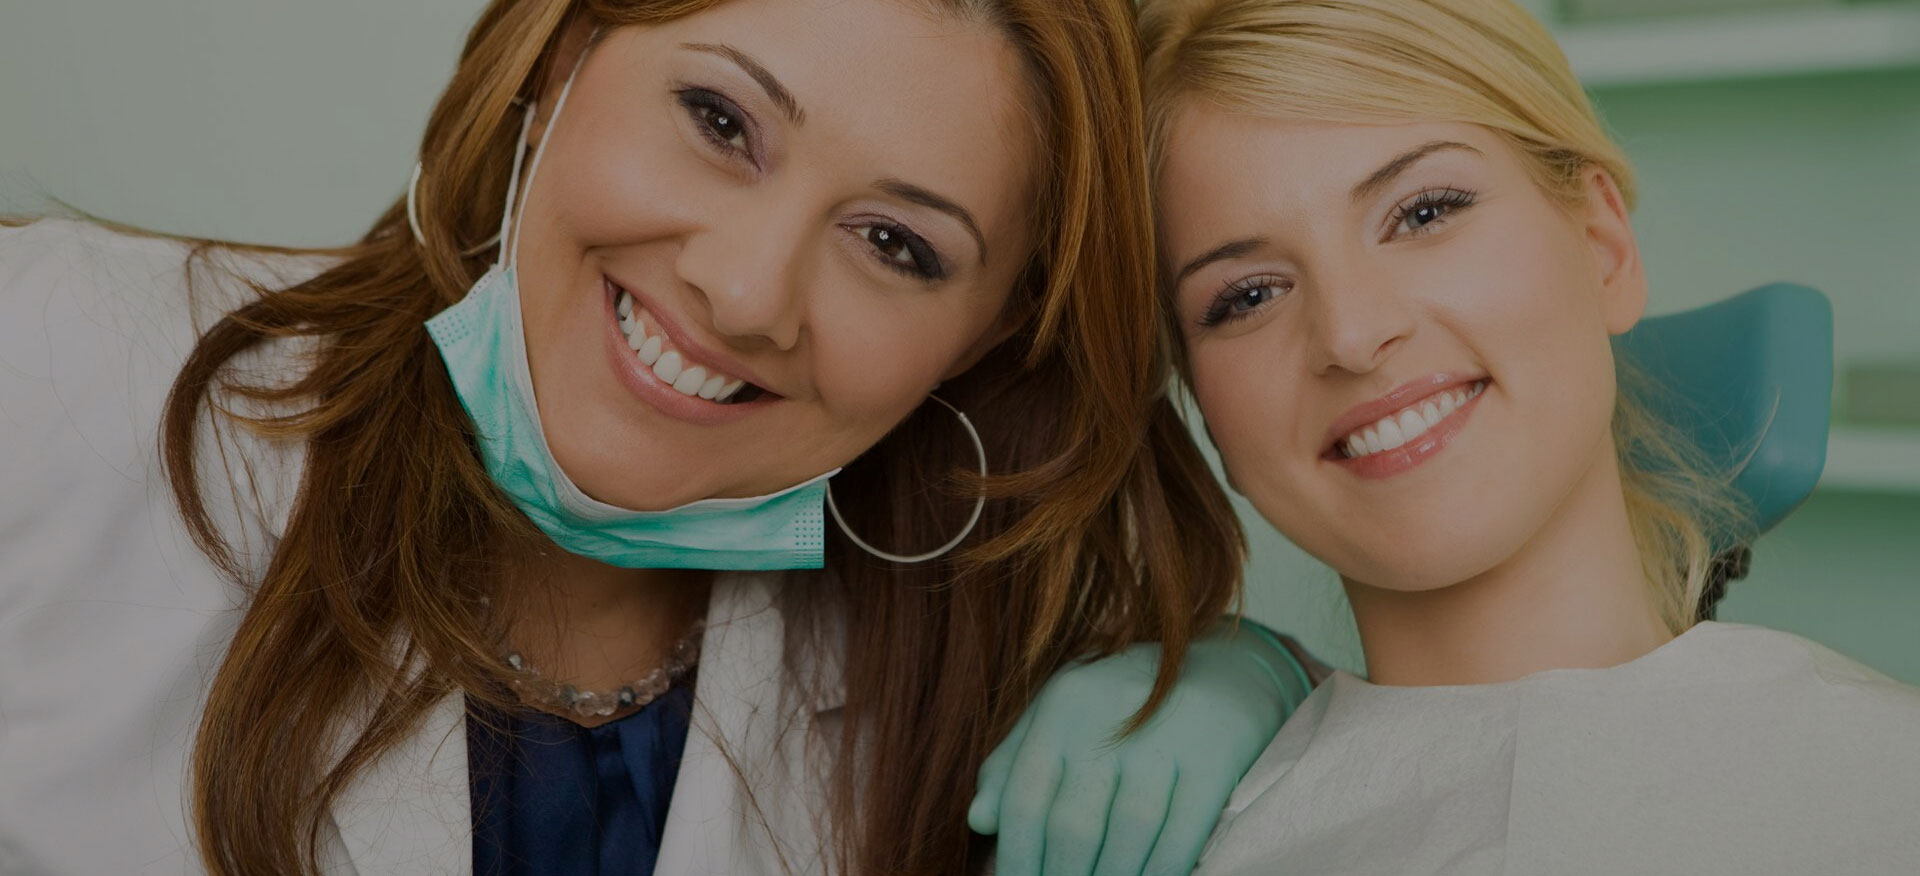 dentist jobs, dental assistant jobs, dental hygienist jobs, and dental office administrator jobs